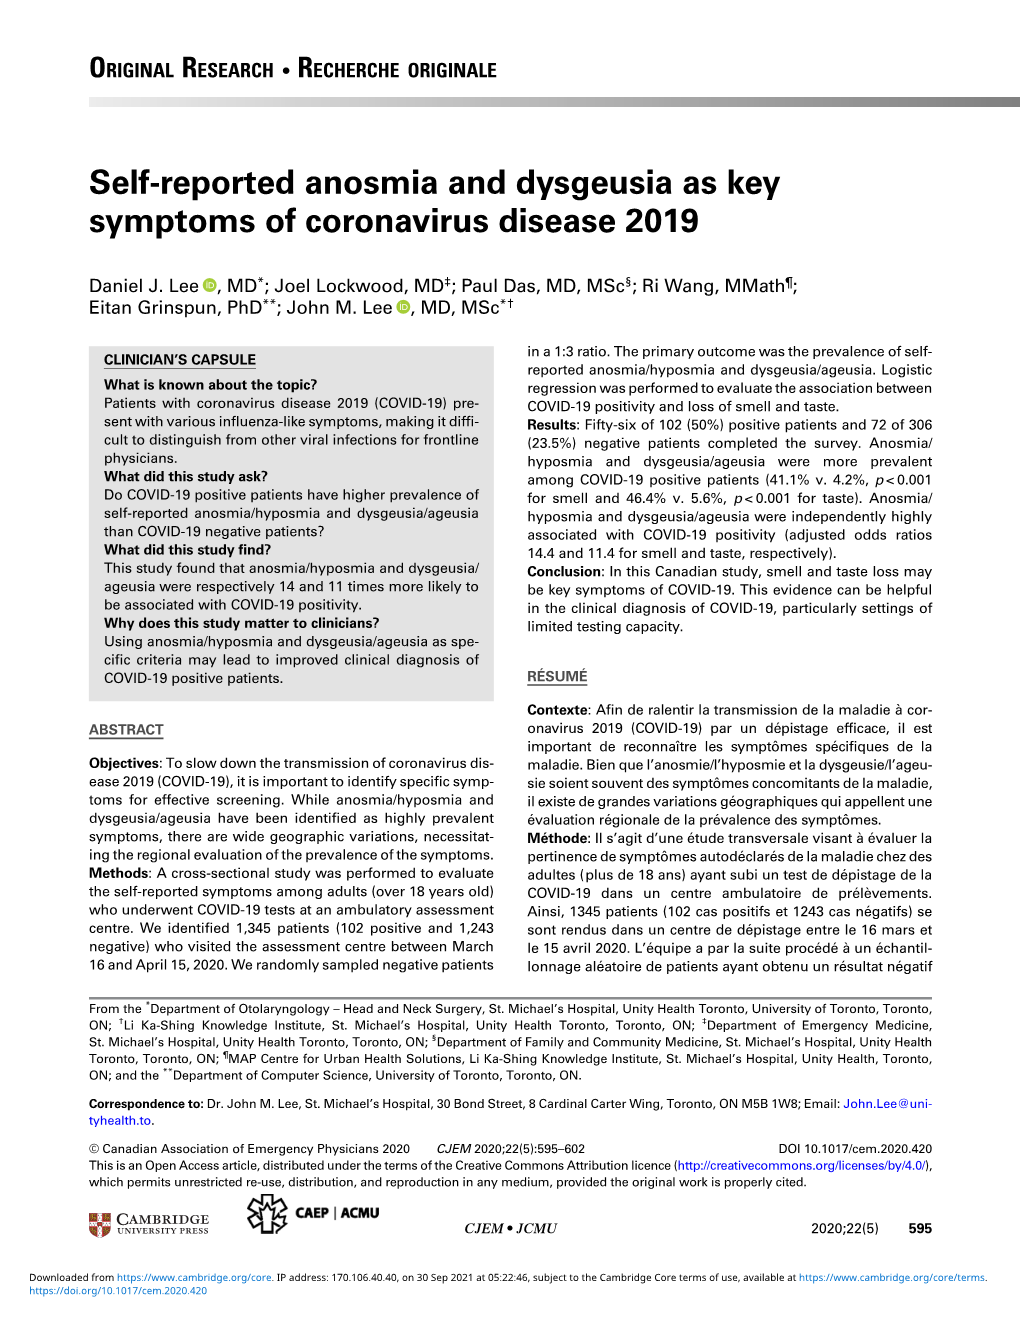 Self-Reported Anosmia and Dysgeusia As Key Symptoms of Coronavirus Disease 2019